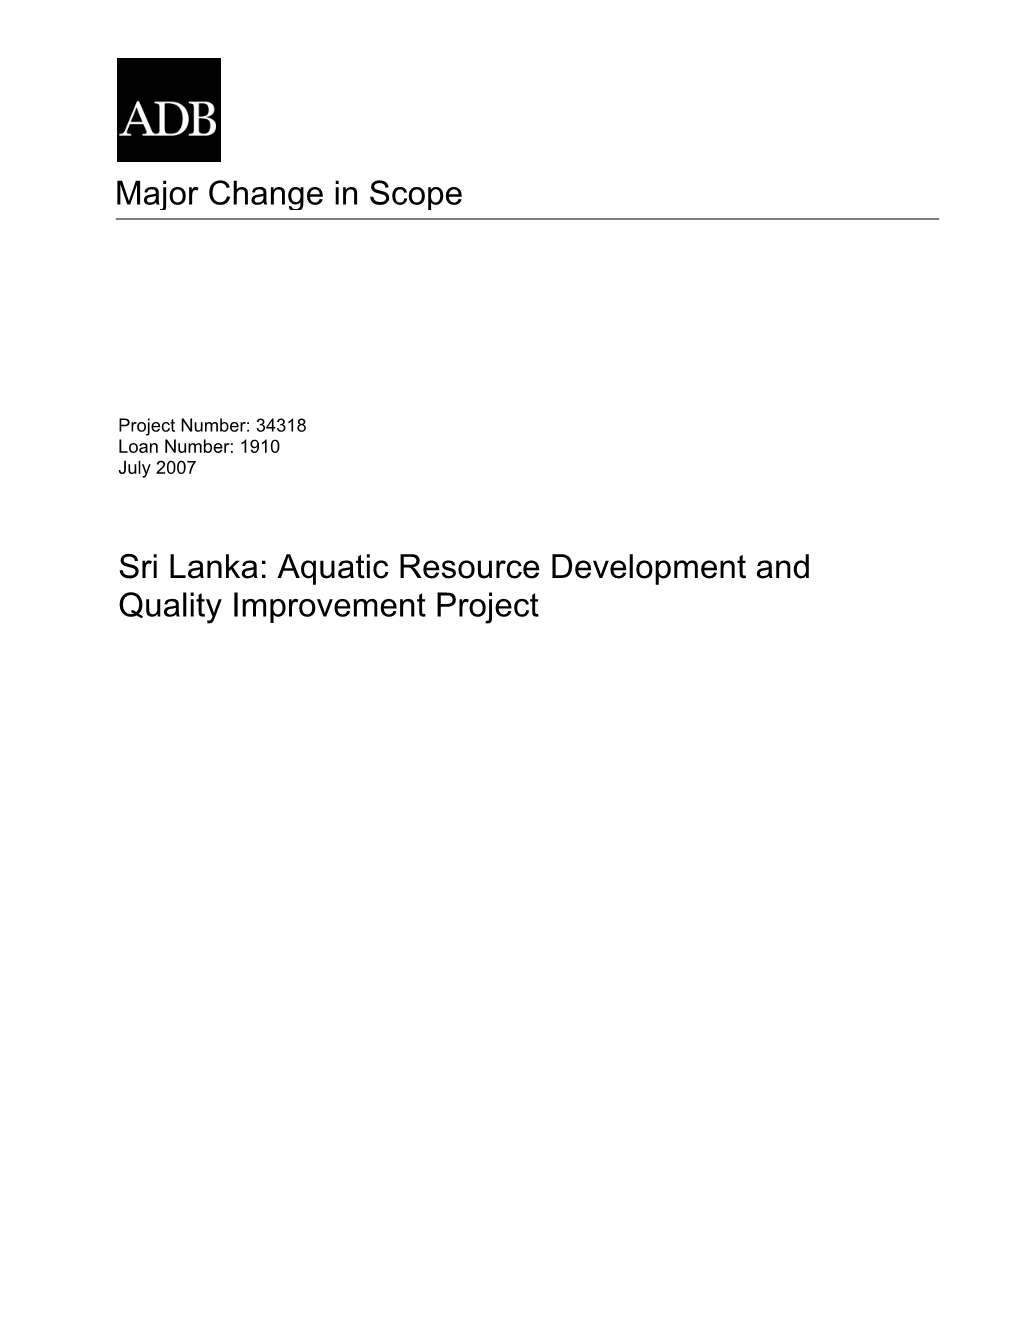 Aquatic Resource Development and Quality Improvement Project